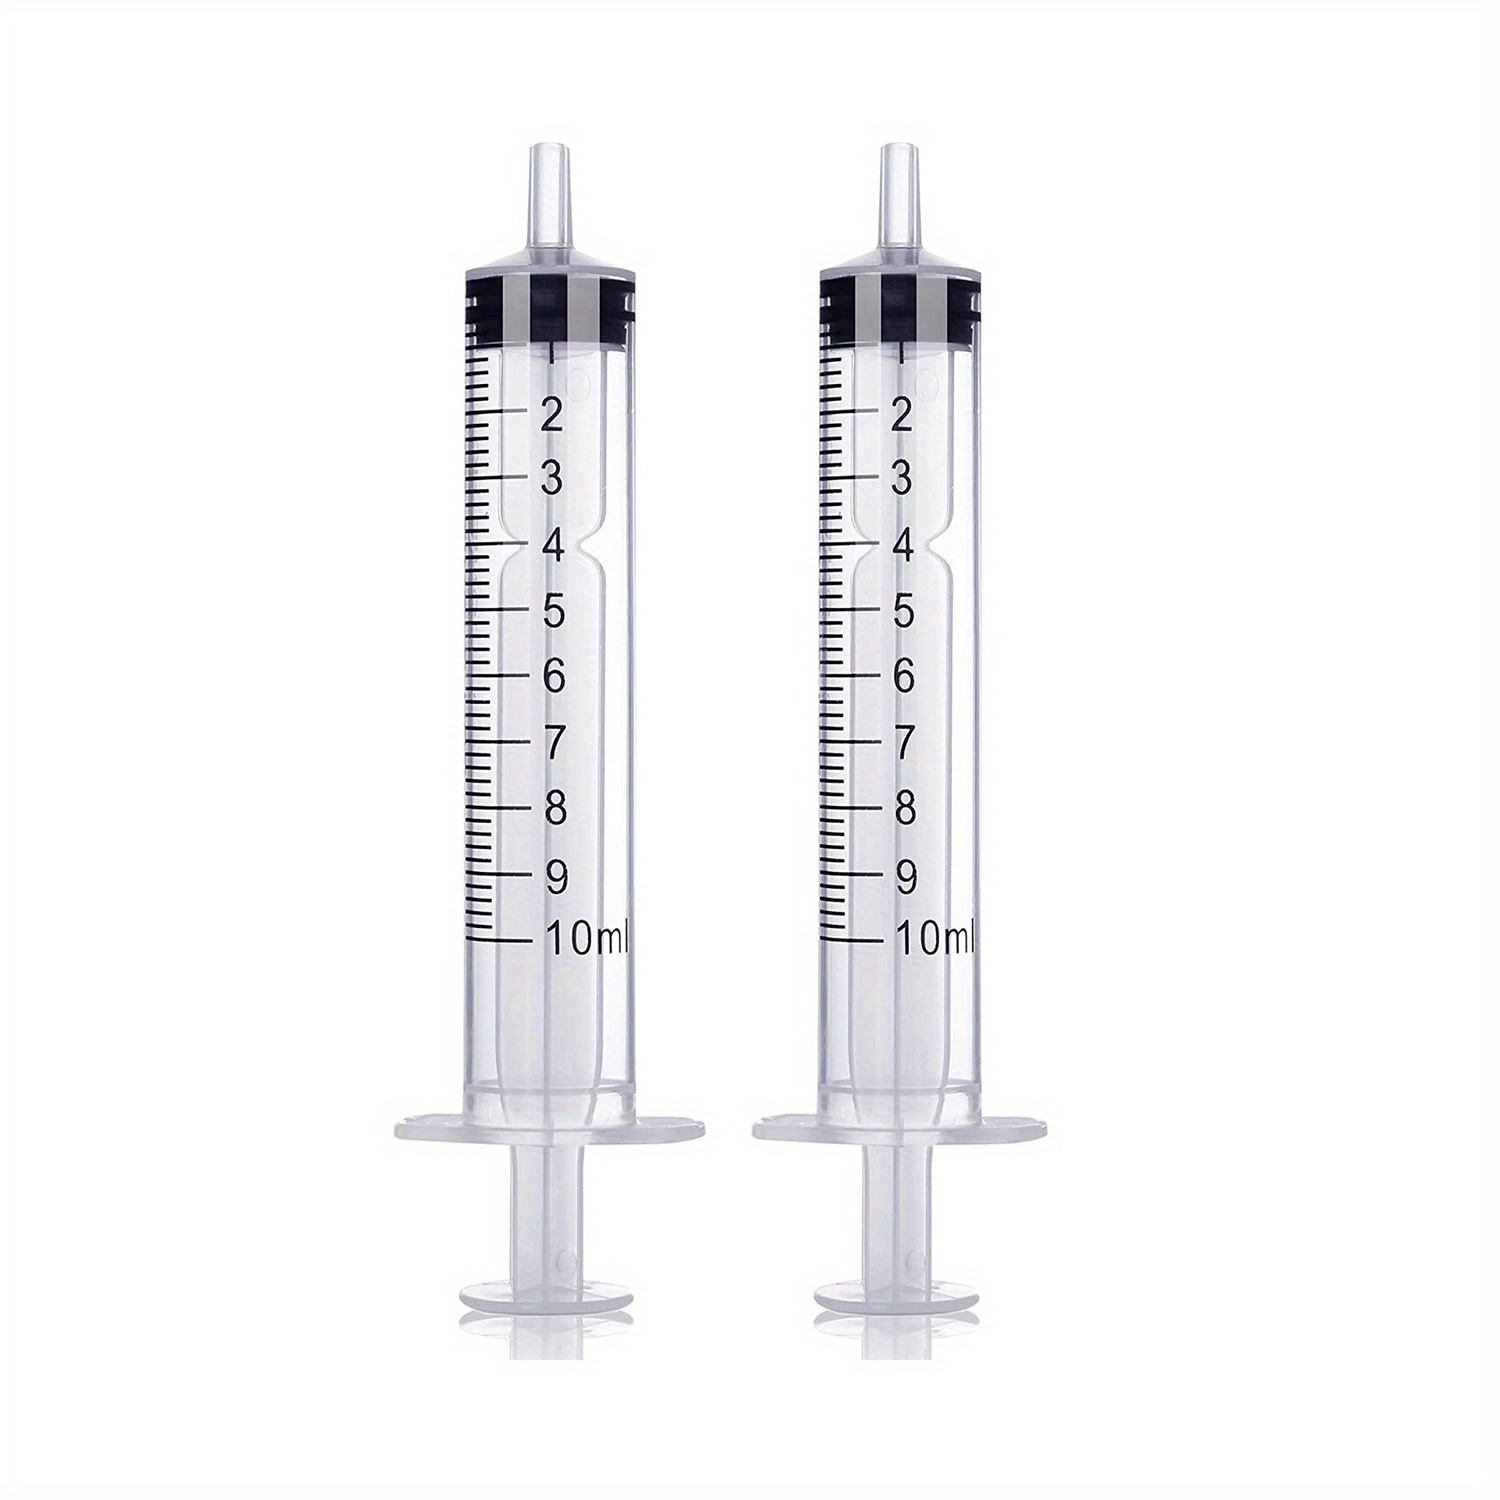  12 Pack 2ml Plastic Luer Lock Syringe, Measuring Syringe  Individually Sealed for Scientific Labs, Measuring Liquids, Feeding Pets,  Oil or Glue Applicator (2ml, 12) : Industrial & Scientific